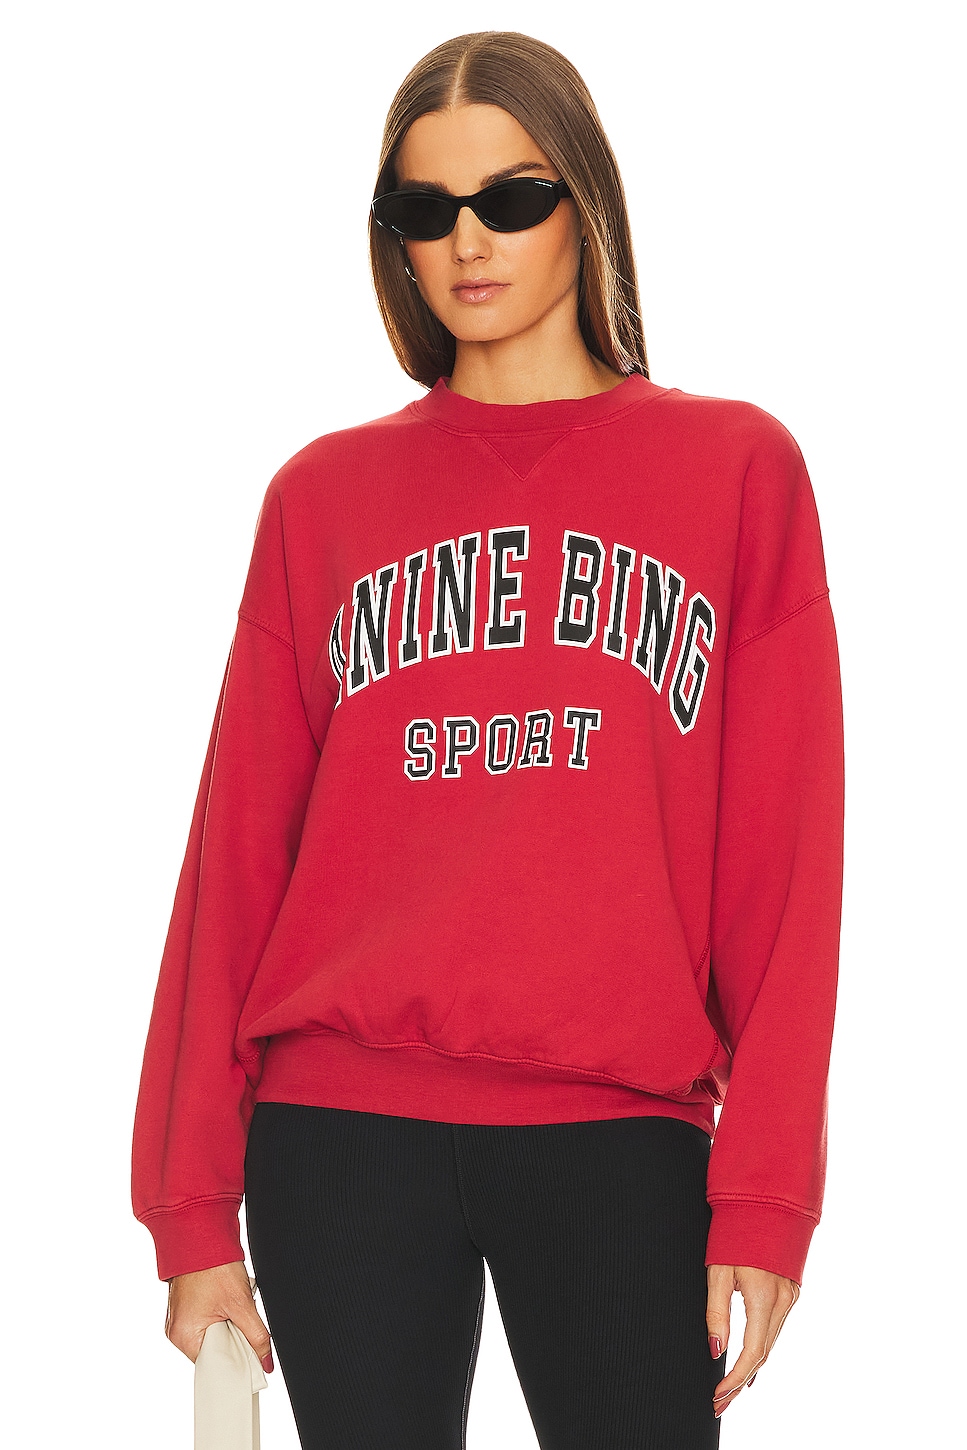 Anine Bing Sweatshirt - Straight A Style